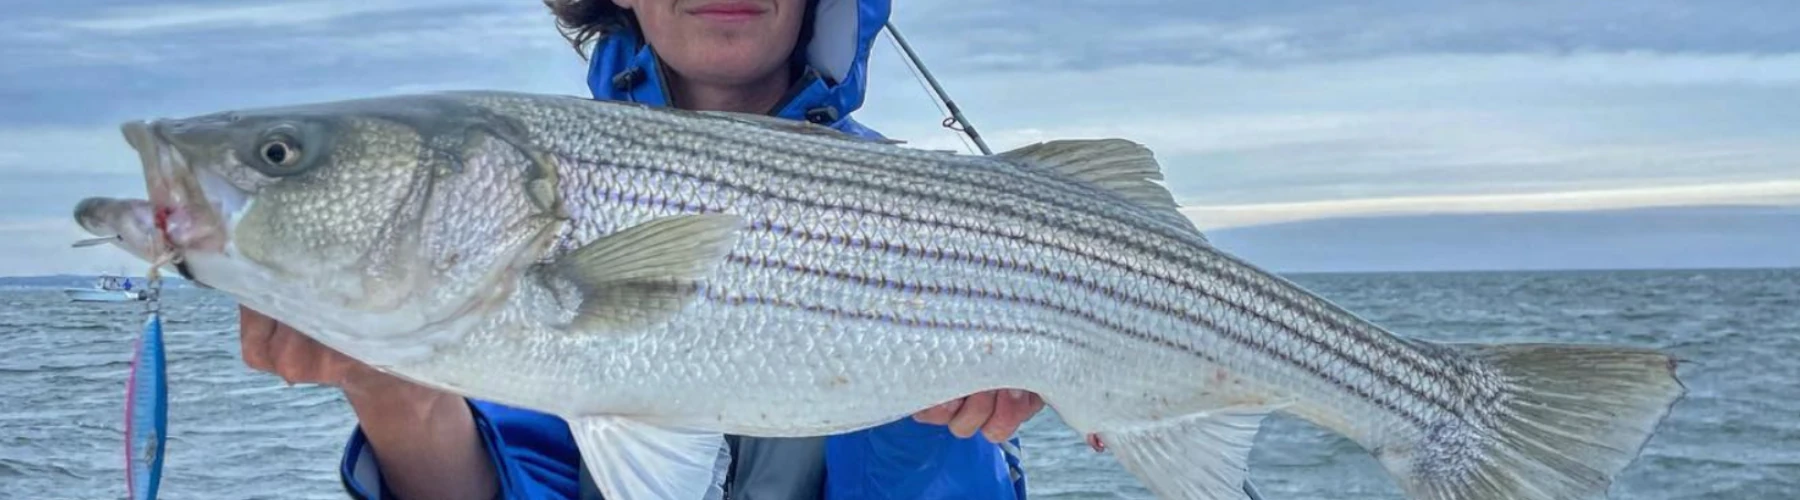 an angler holding a striped bass